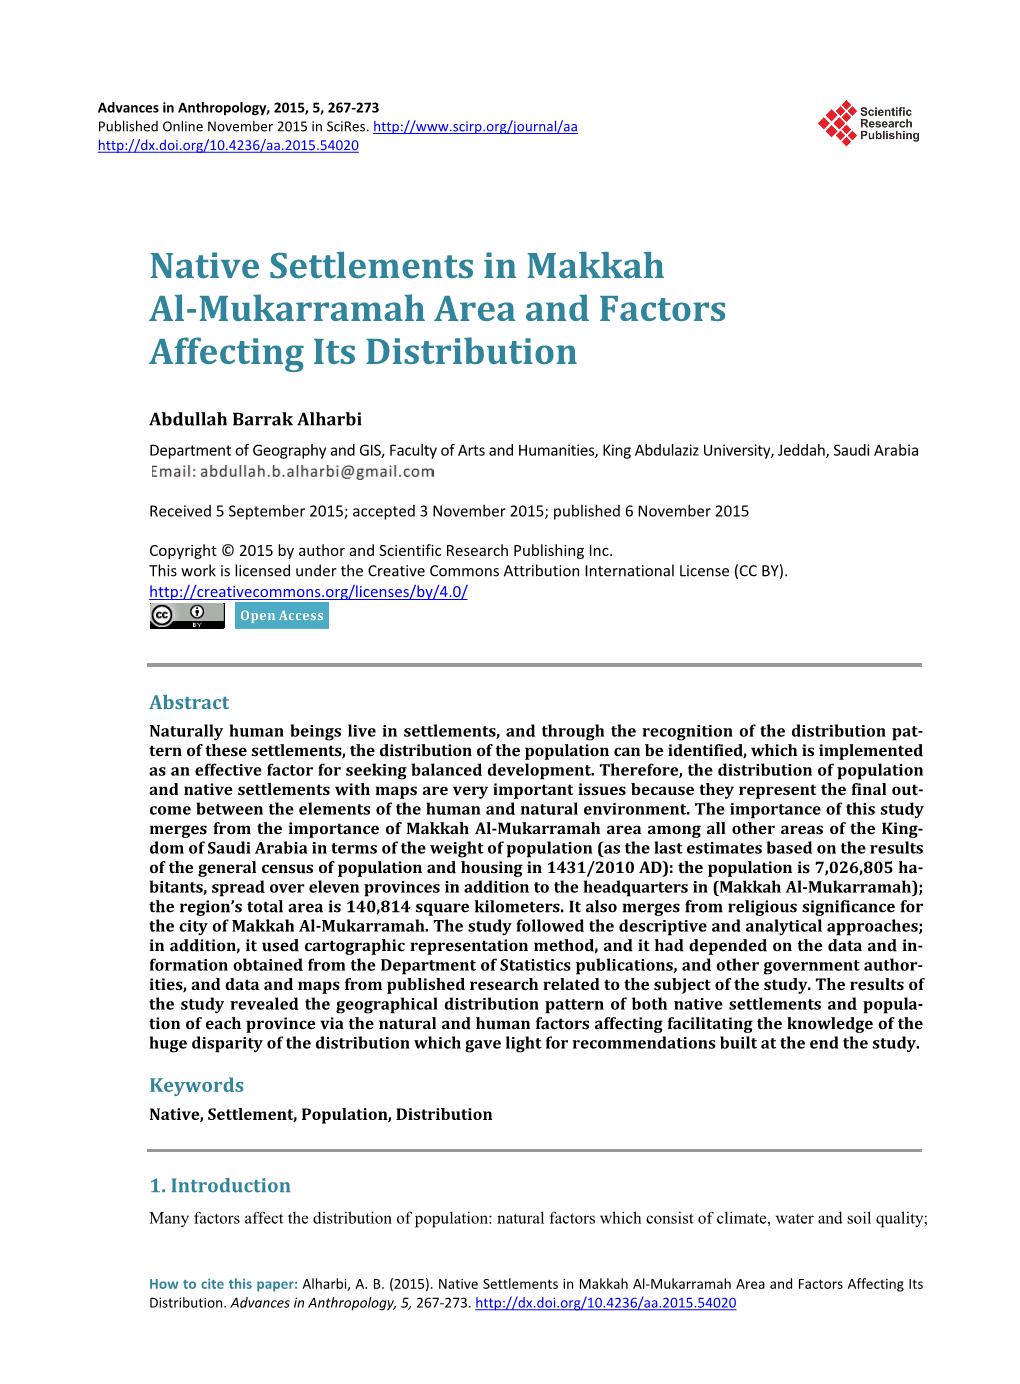 Native Settlements in Makkah Al-Mukarramah Area and Factors Affecting Its Distribution